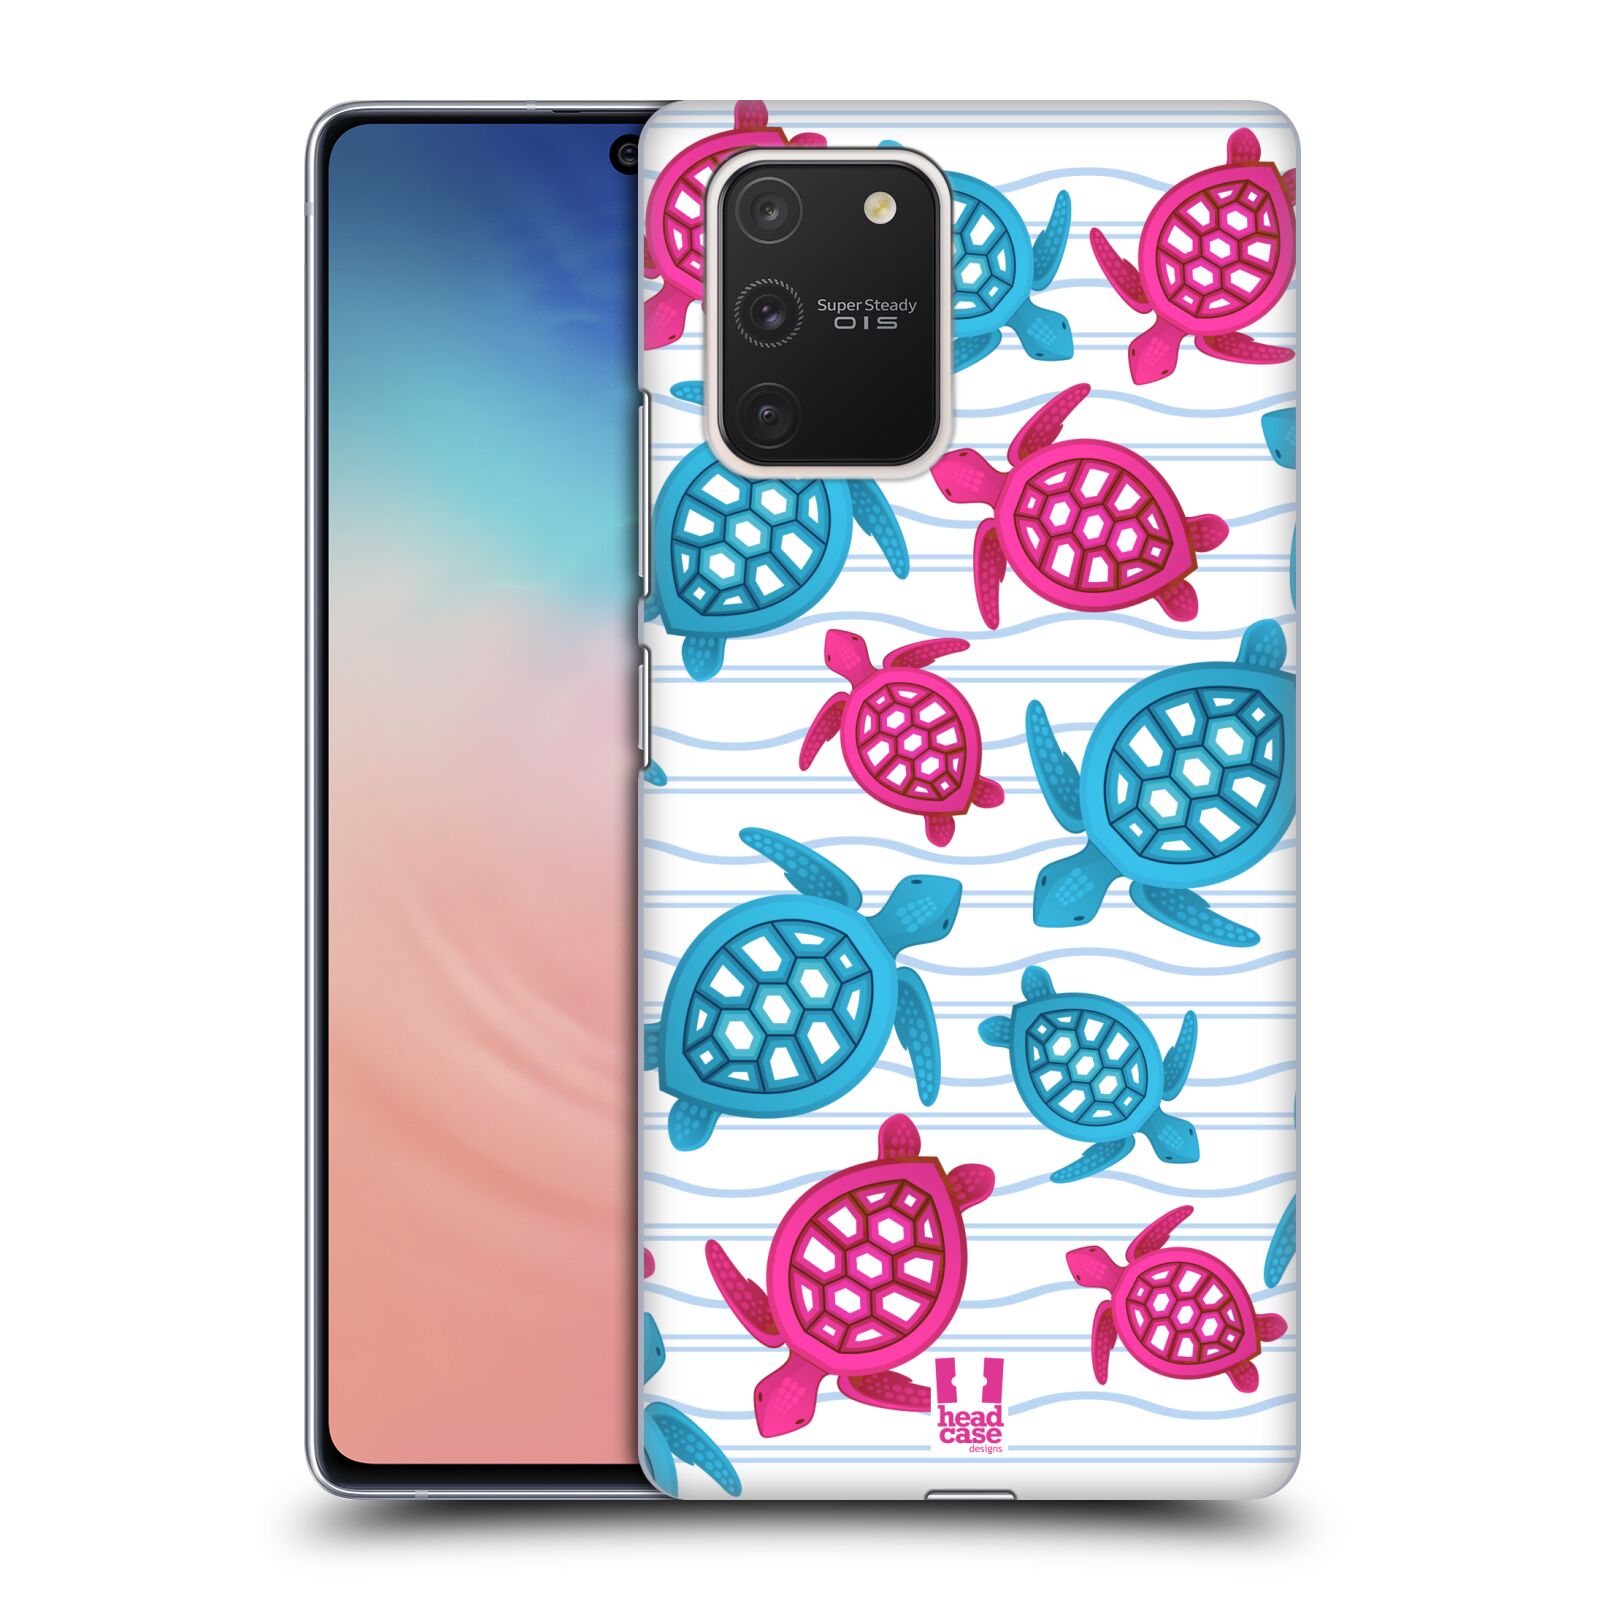 Zadní obal pro mobil Samsung Galaxy S10 LITE - HEAD CASE - kreslený mořský vzor želvičky